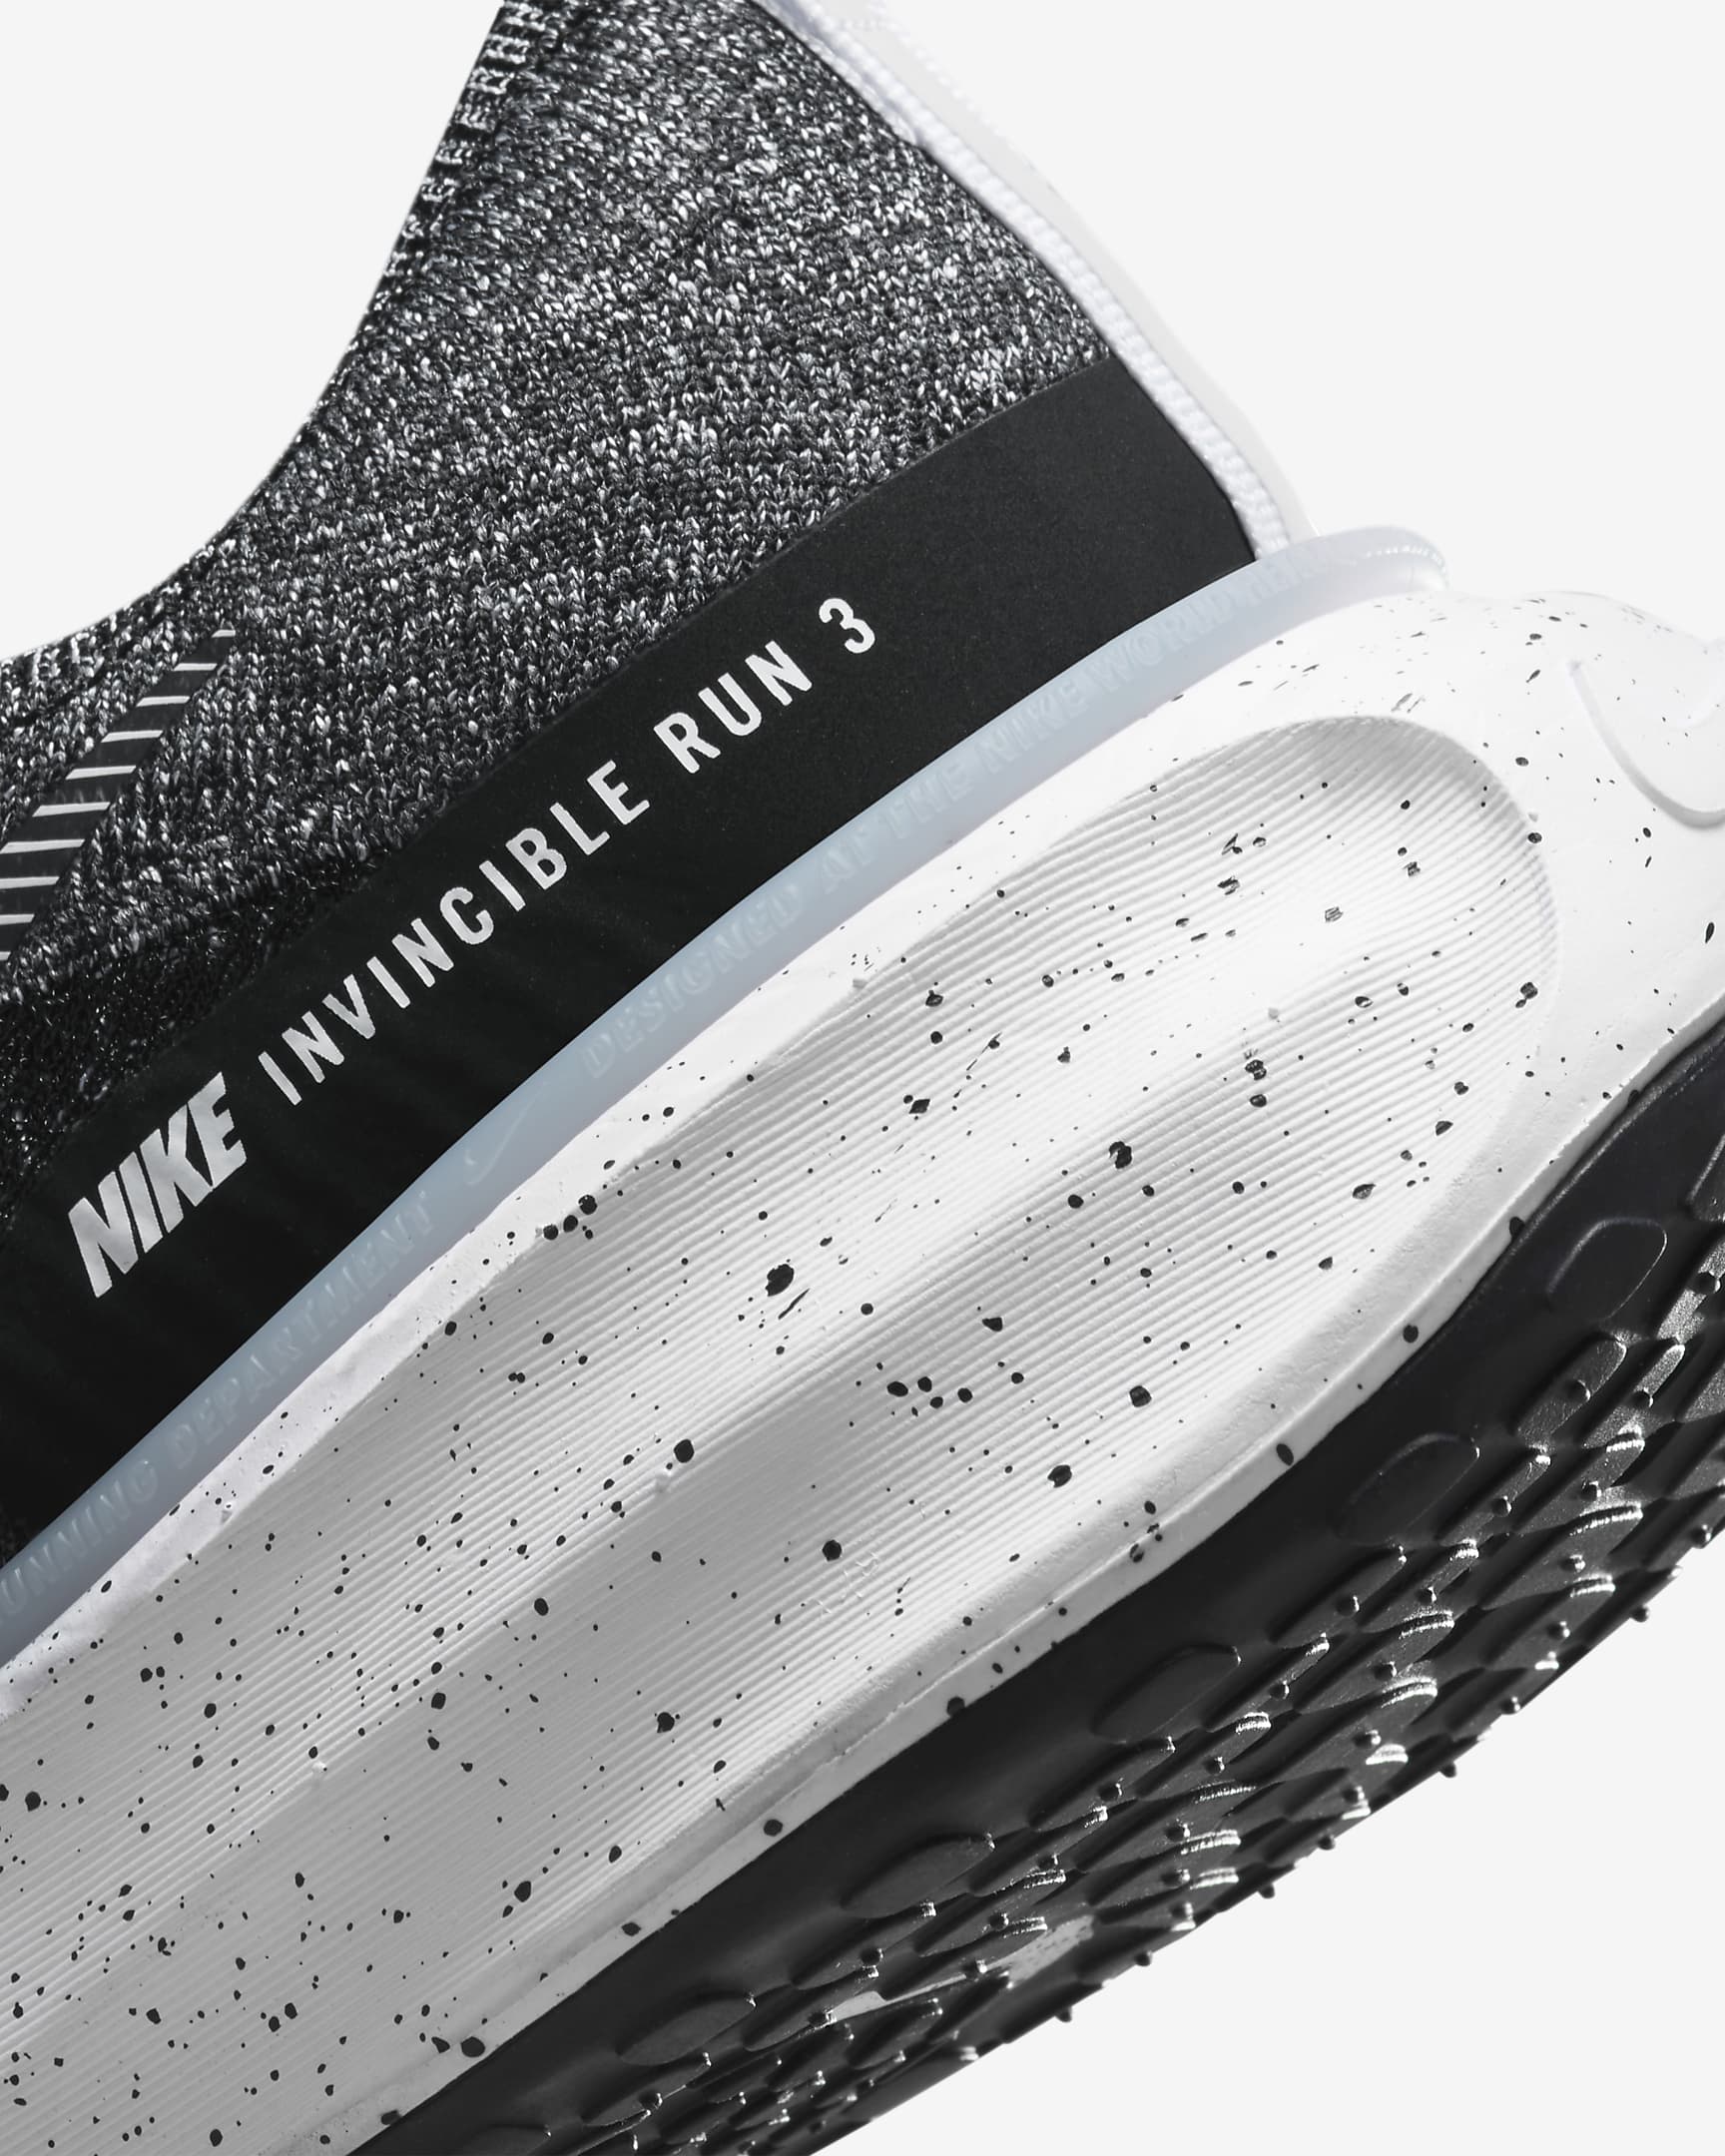 Nike Invincible 3 Men's Road Running Shoes - Black/White